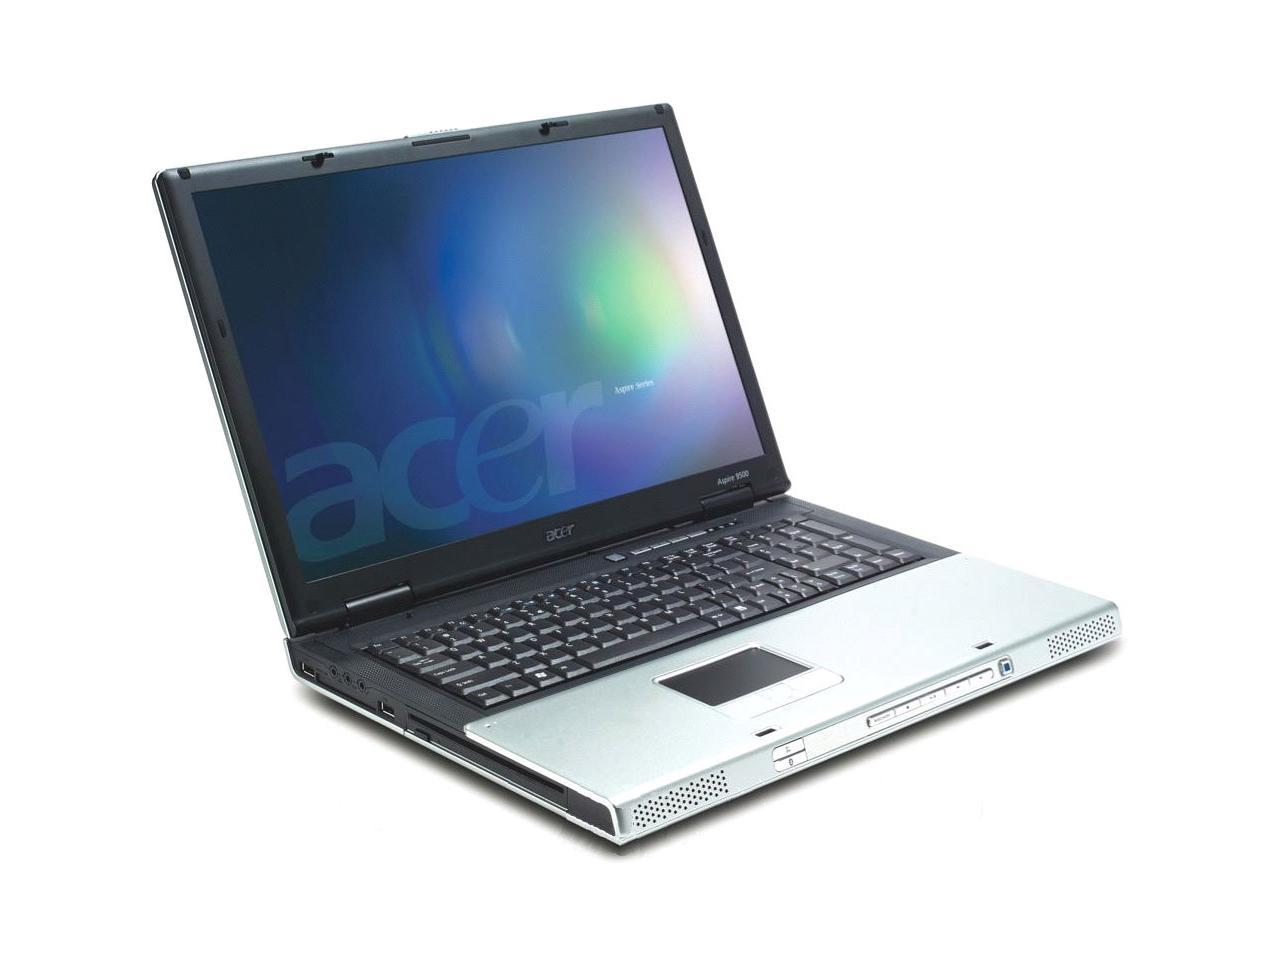 Acer Aspire 3000. Acer Aspire 3620. Ноутбук Acer Aspire 5570z. Acer Aspire 3000 батарея.